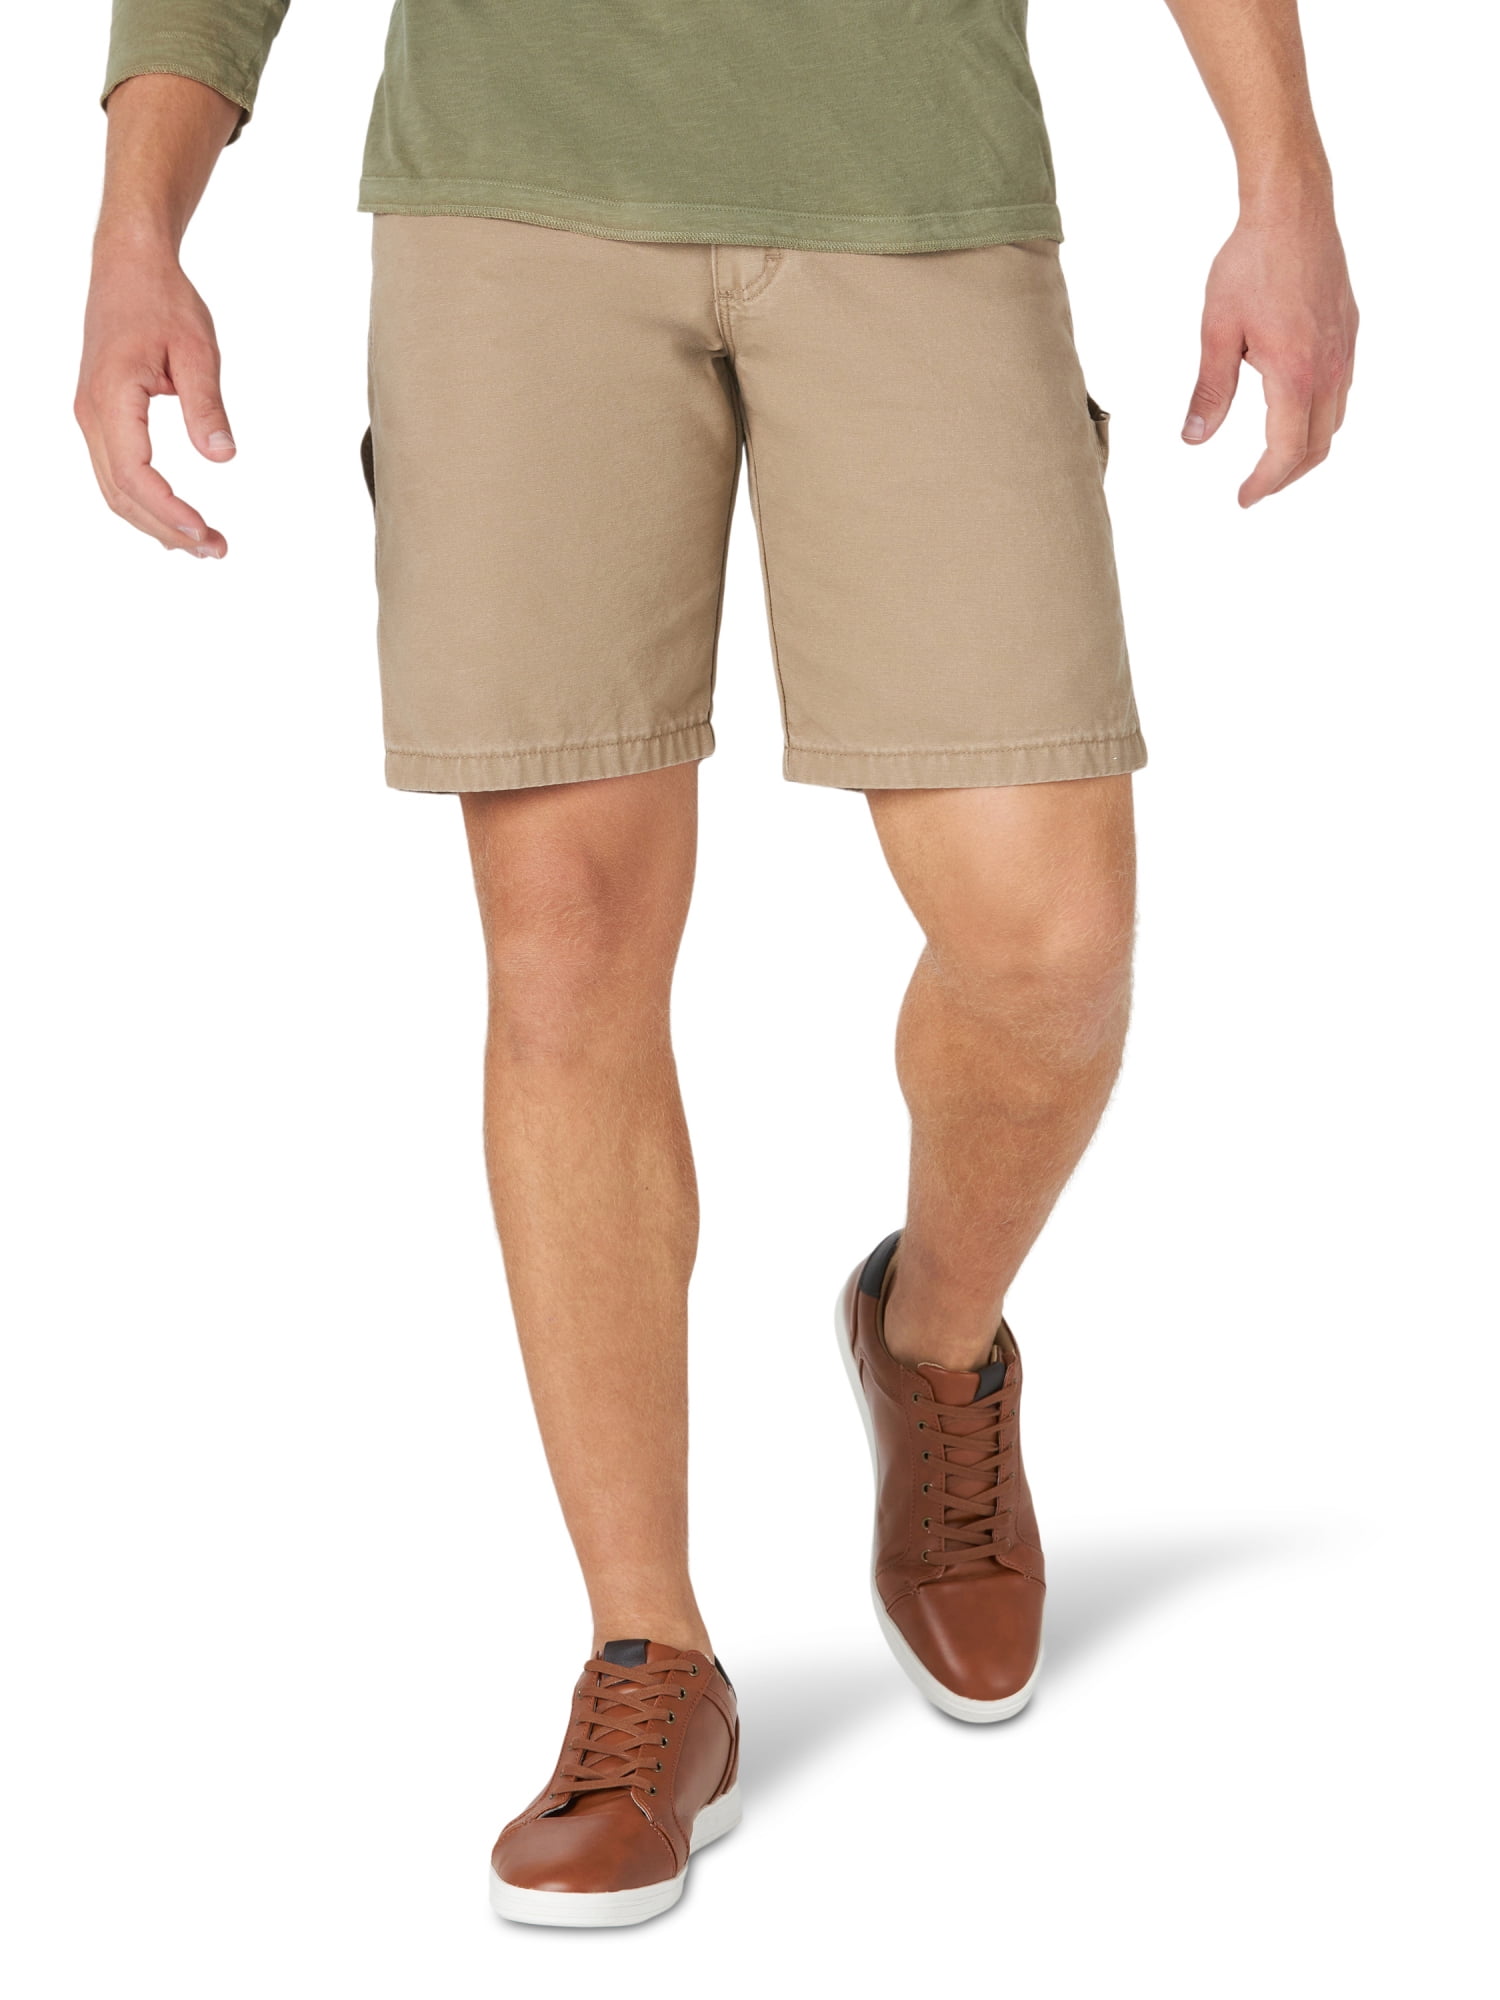 FEDTOSING Men's 3/4 Long Capri Shorts Casual Elastic Waist Cotton